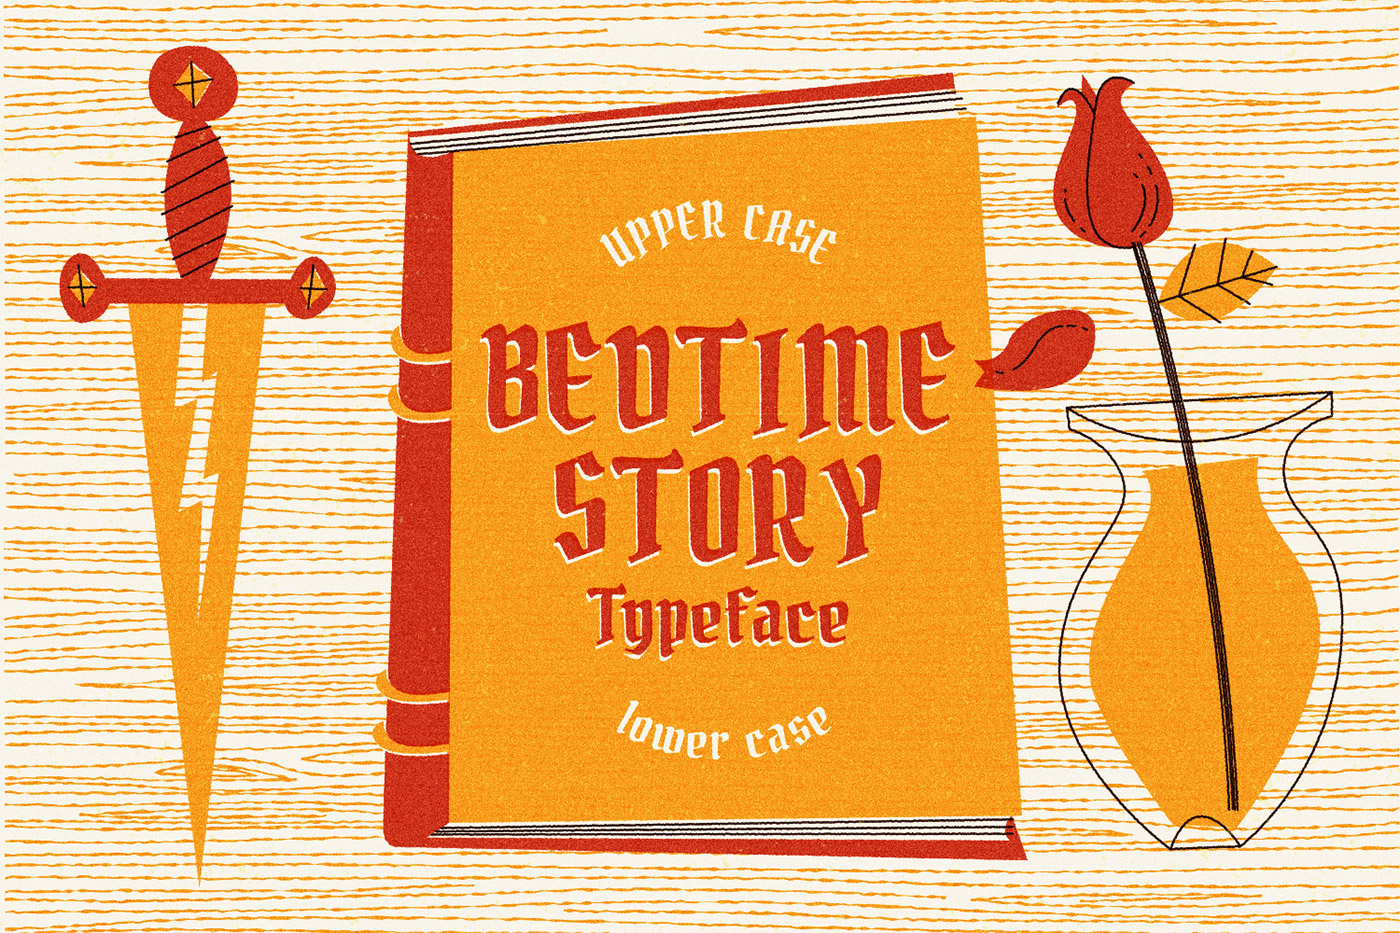 lettering fairytale whimsical legends disney cartoon font Typeface bedtime Story Book